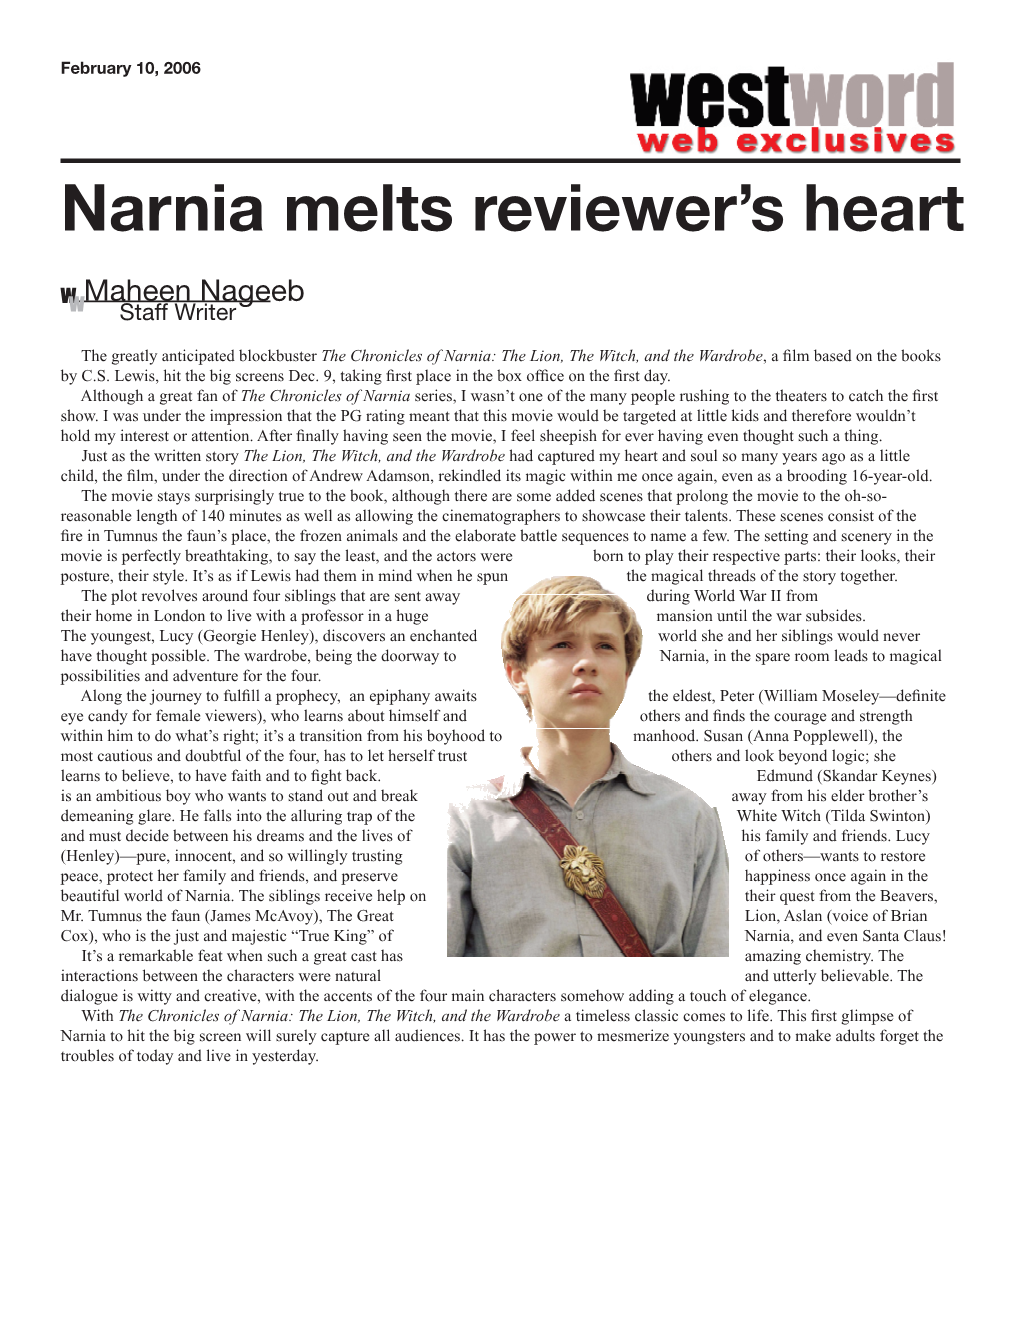 Narnia Melts Reviewer's Heart